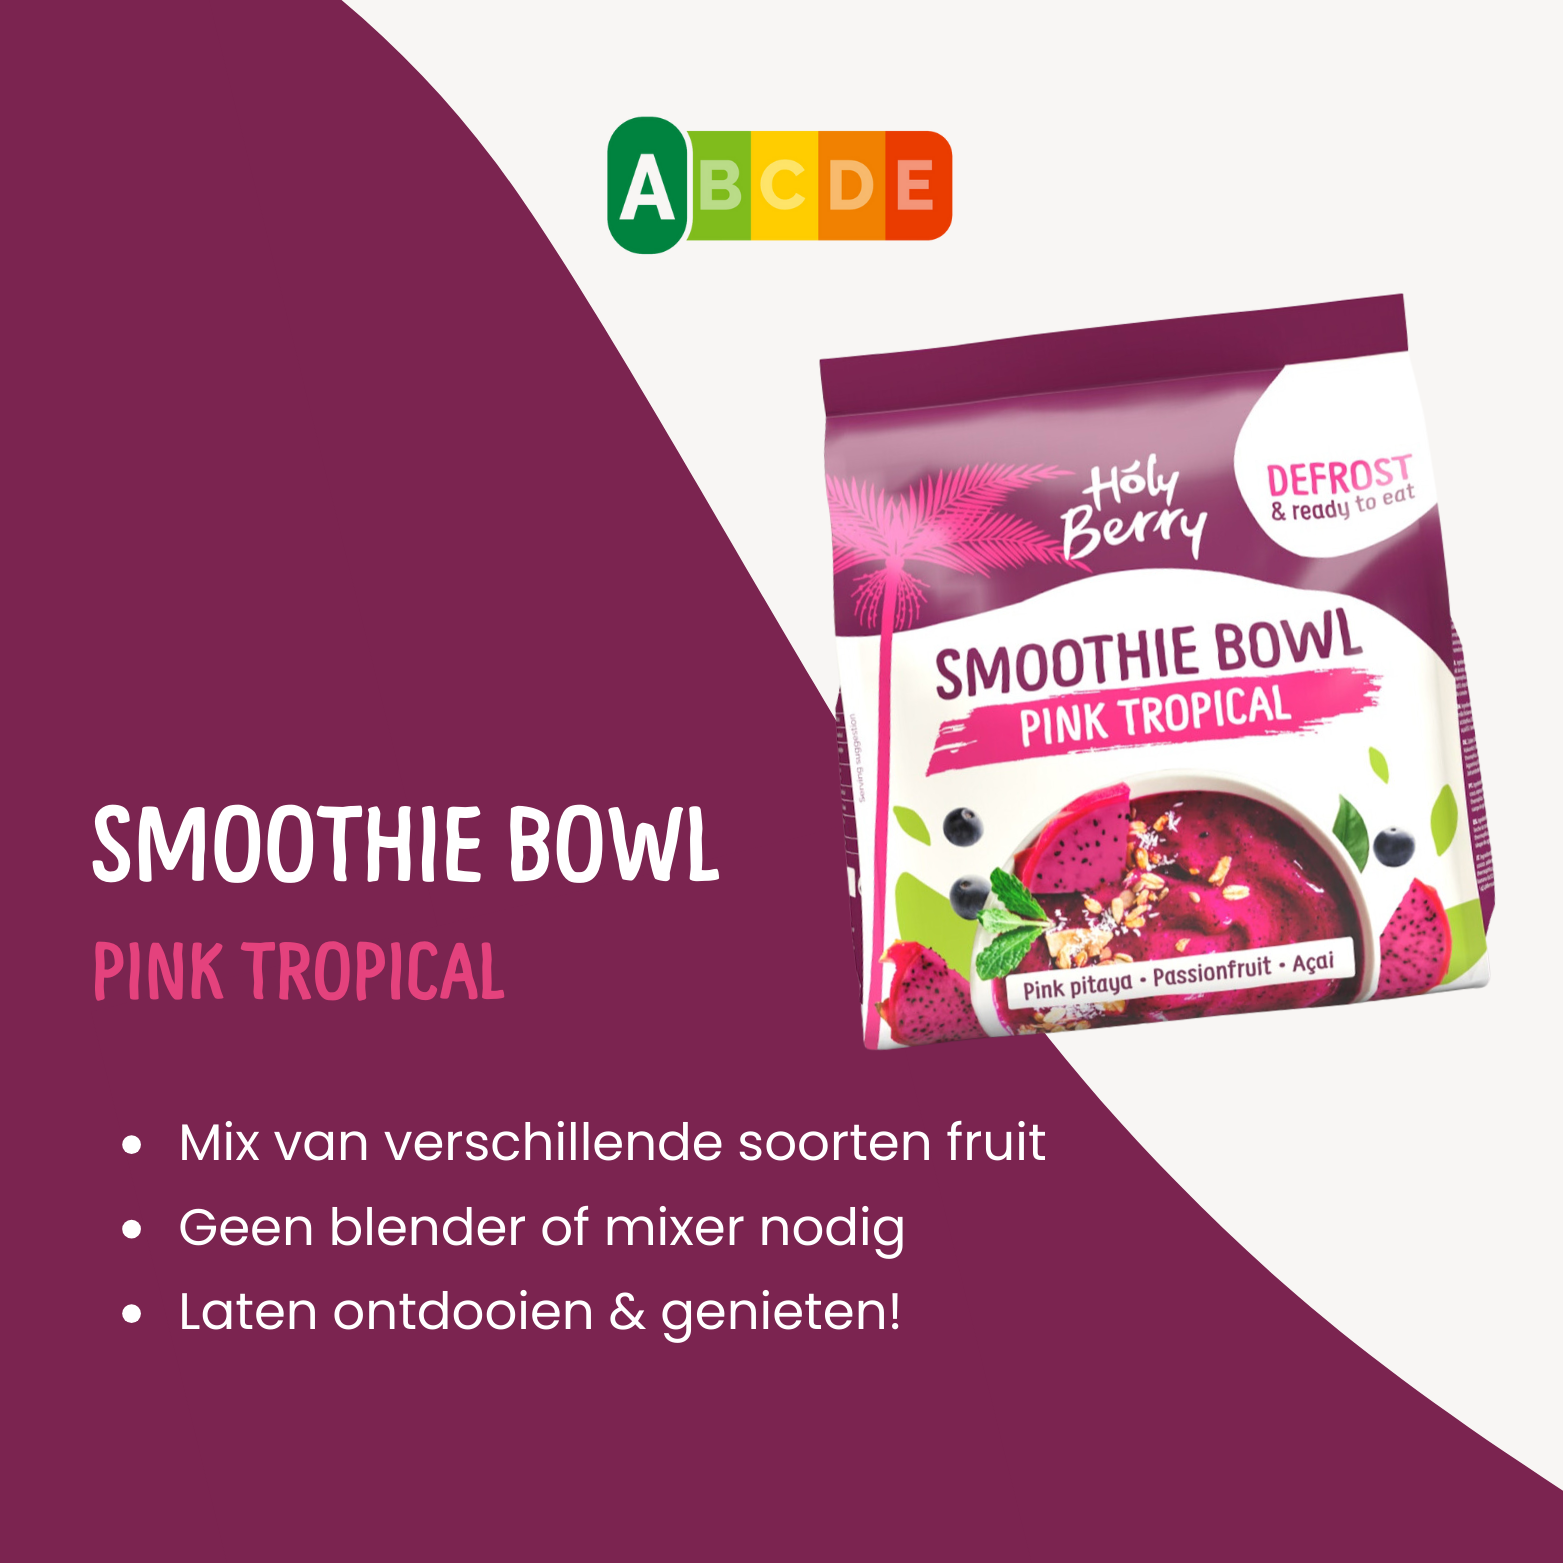 Voordelen van Smoothie Bowl Pink Tropical